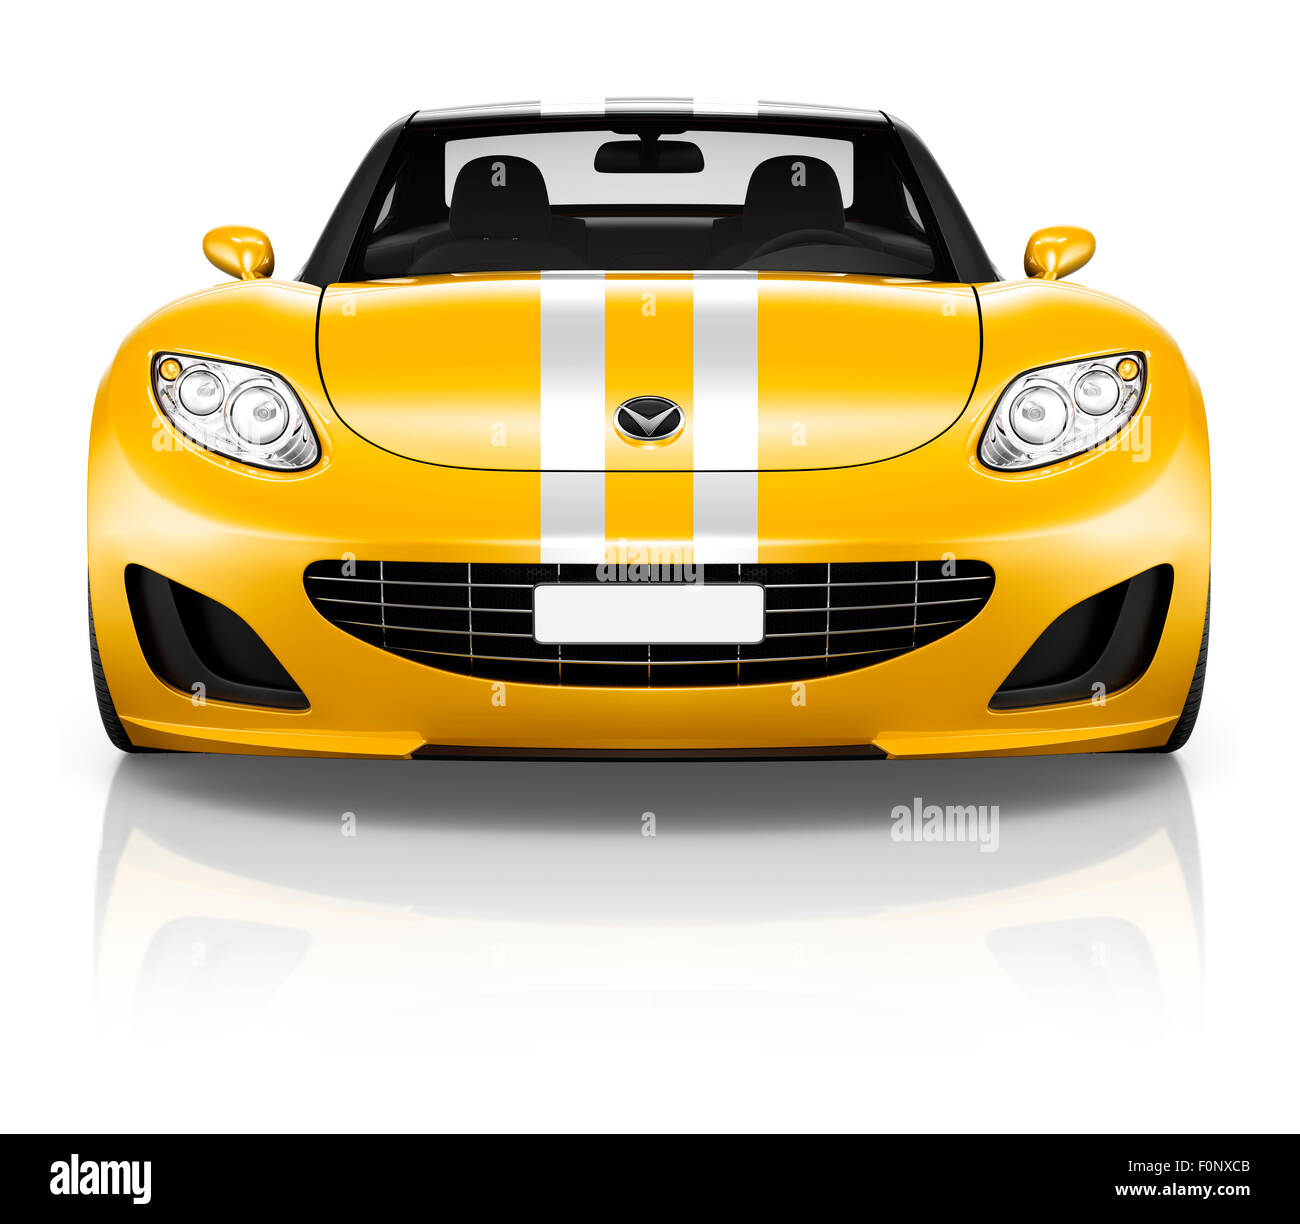 Car Automobile Contemporary Drive Driving Vehicle Transportation Concept Stock Photo